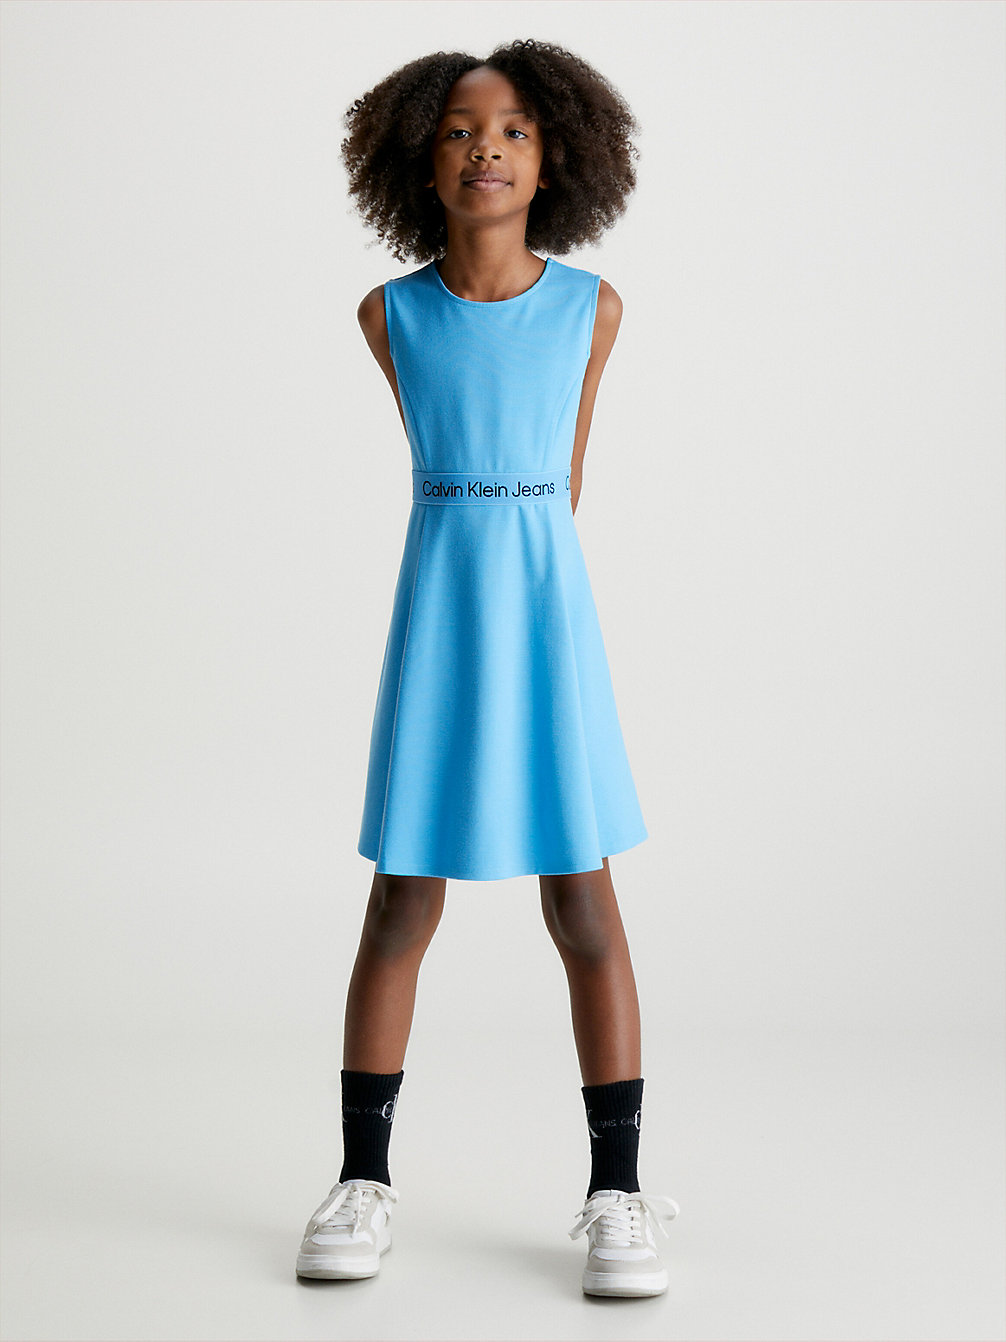 BLUE CRUSH Flared Milano Dress undefined girls Calvin Klein